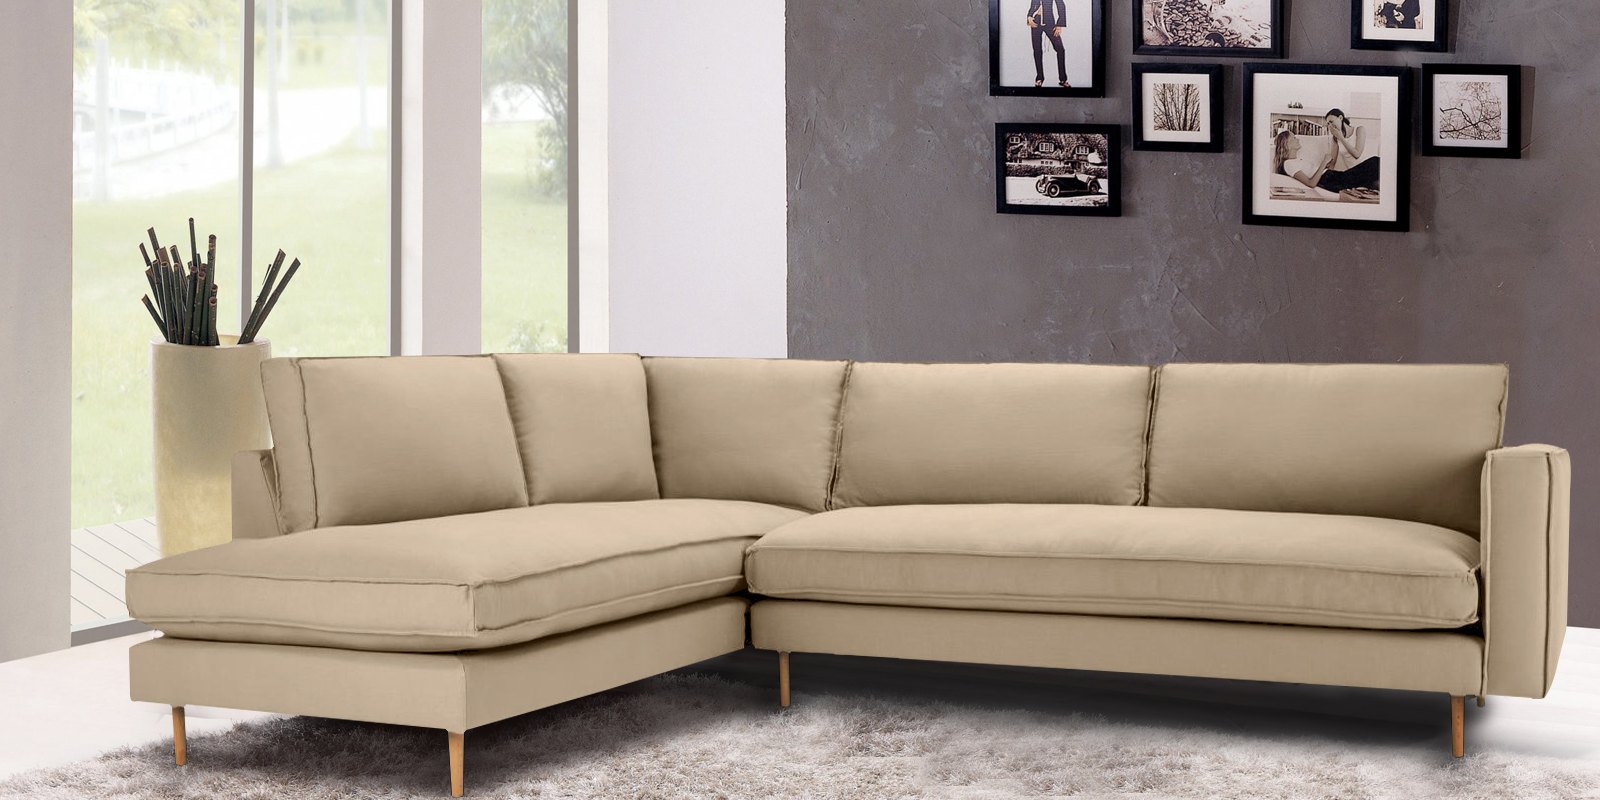 Modular Fabric Rhs Sectional Sofa In